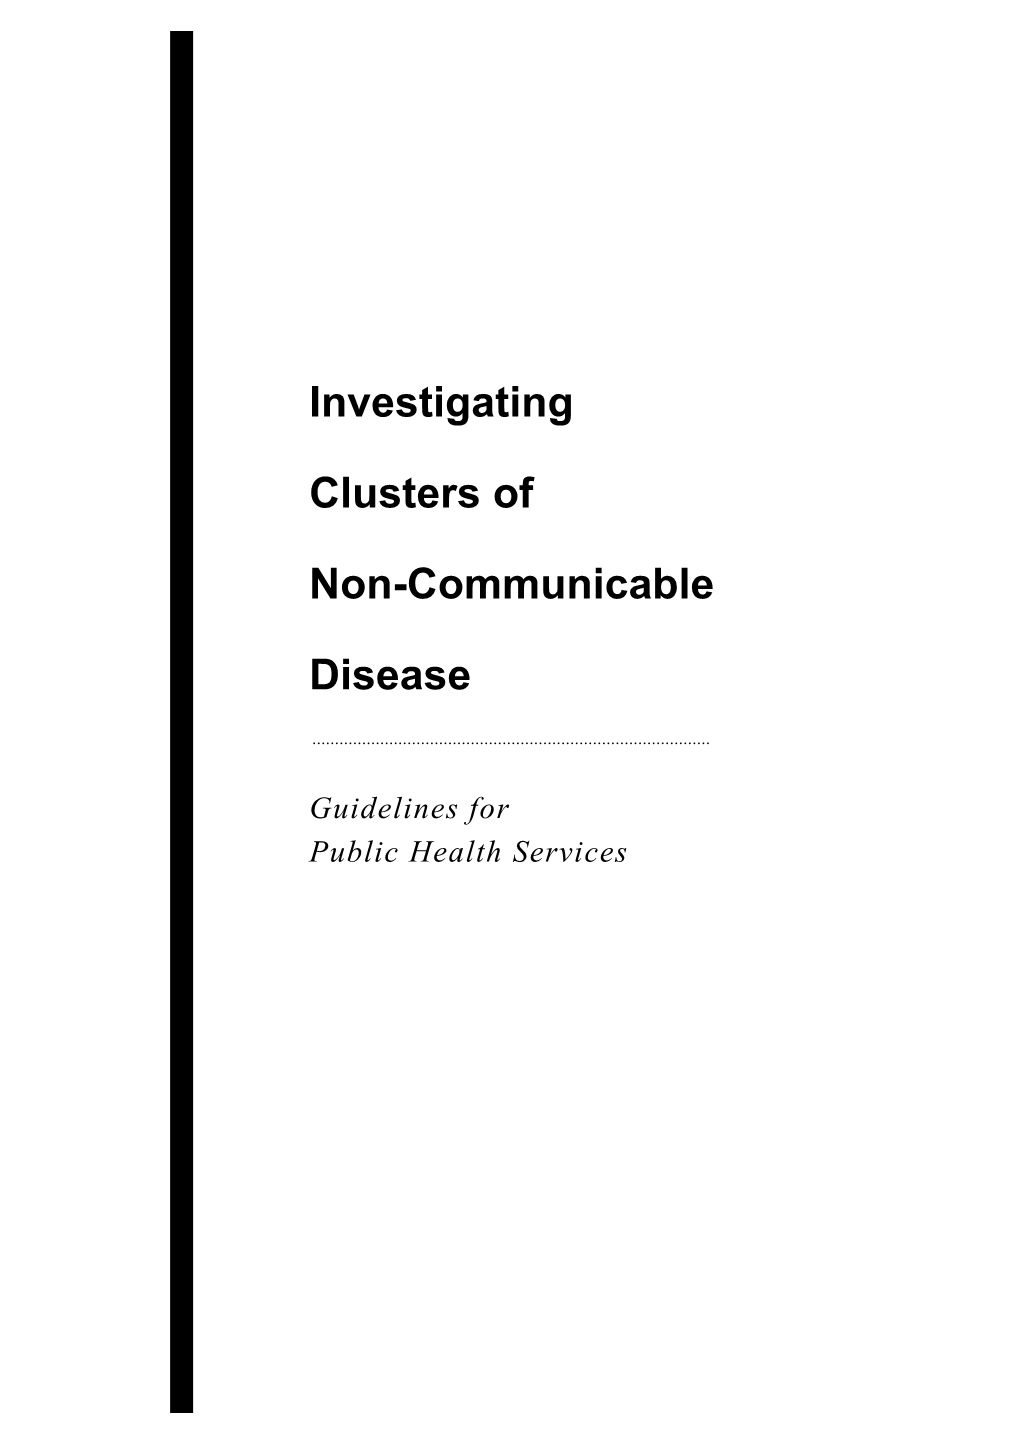 Investigating Clusters of Disease